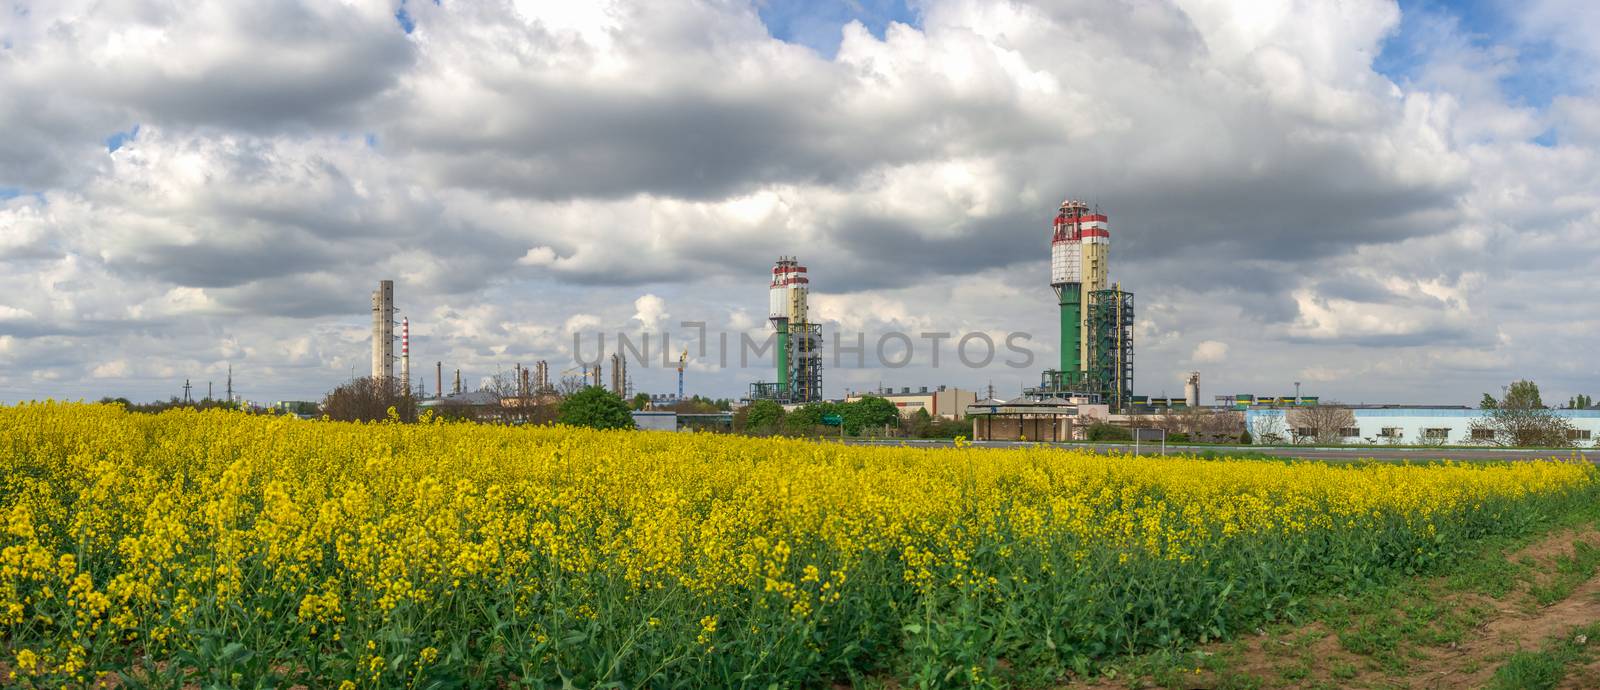 Odessa Port Plant in Ukraine by Multipedia